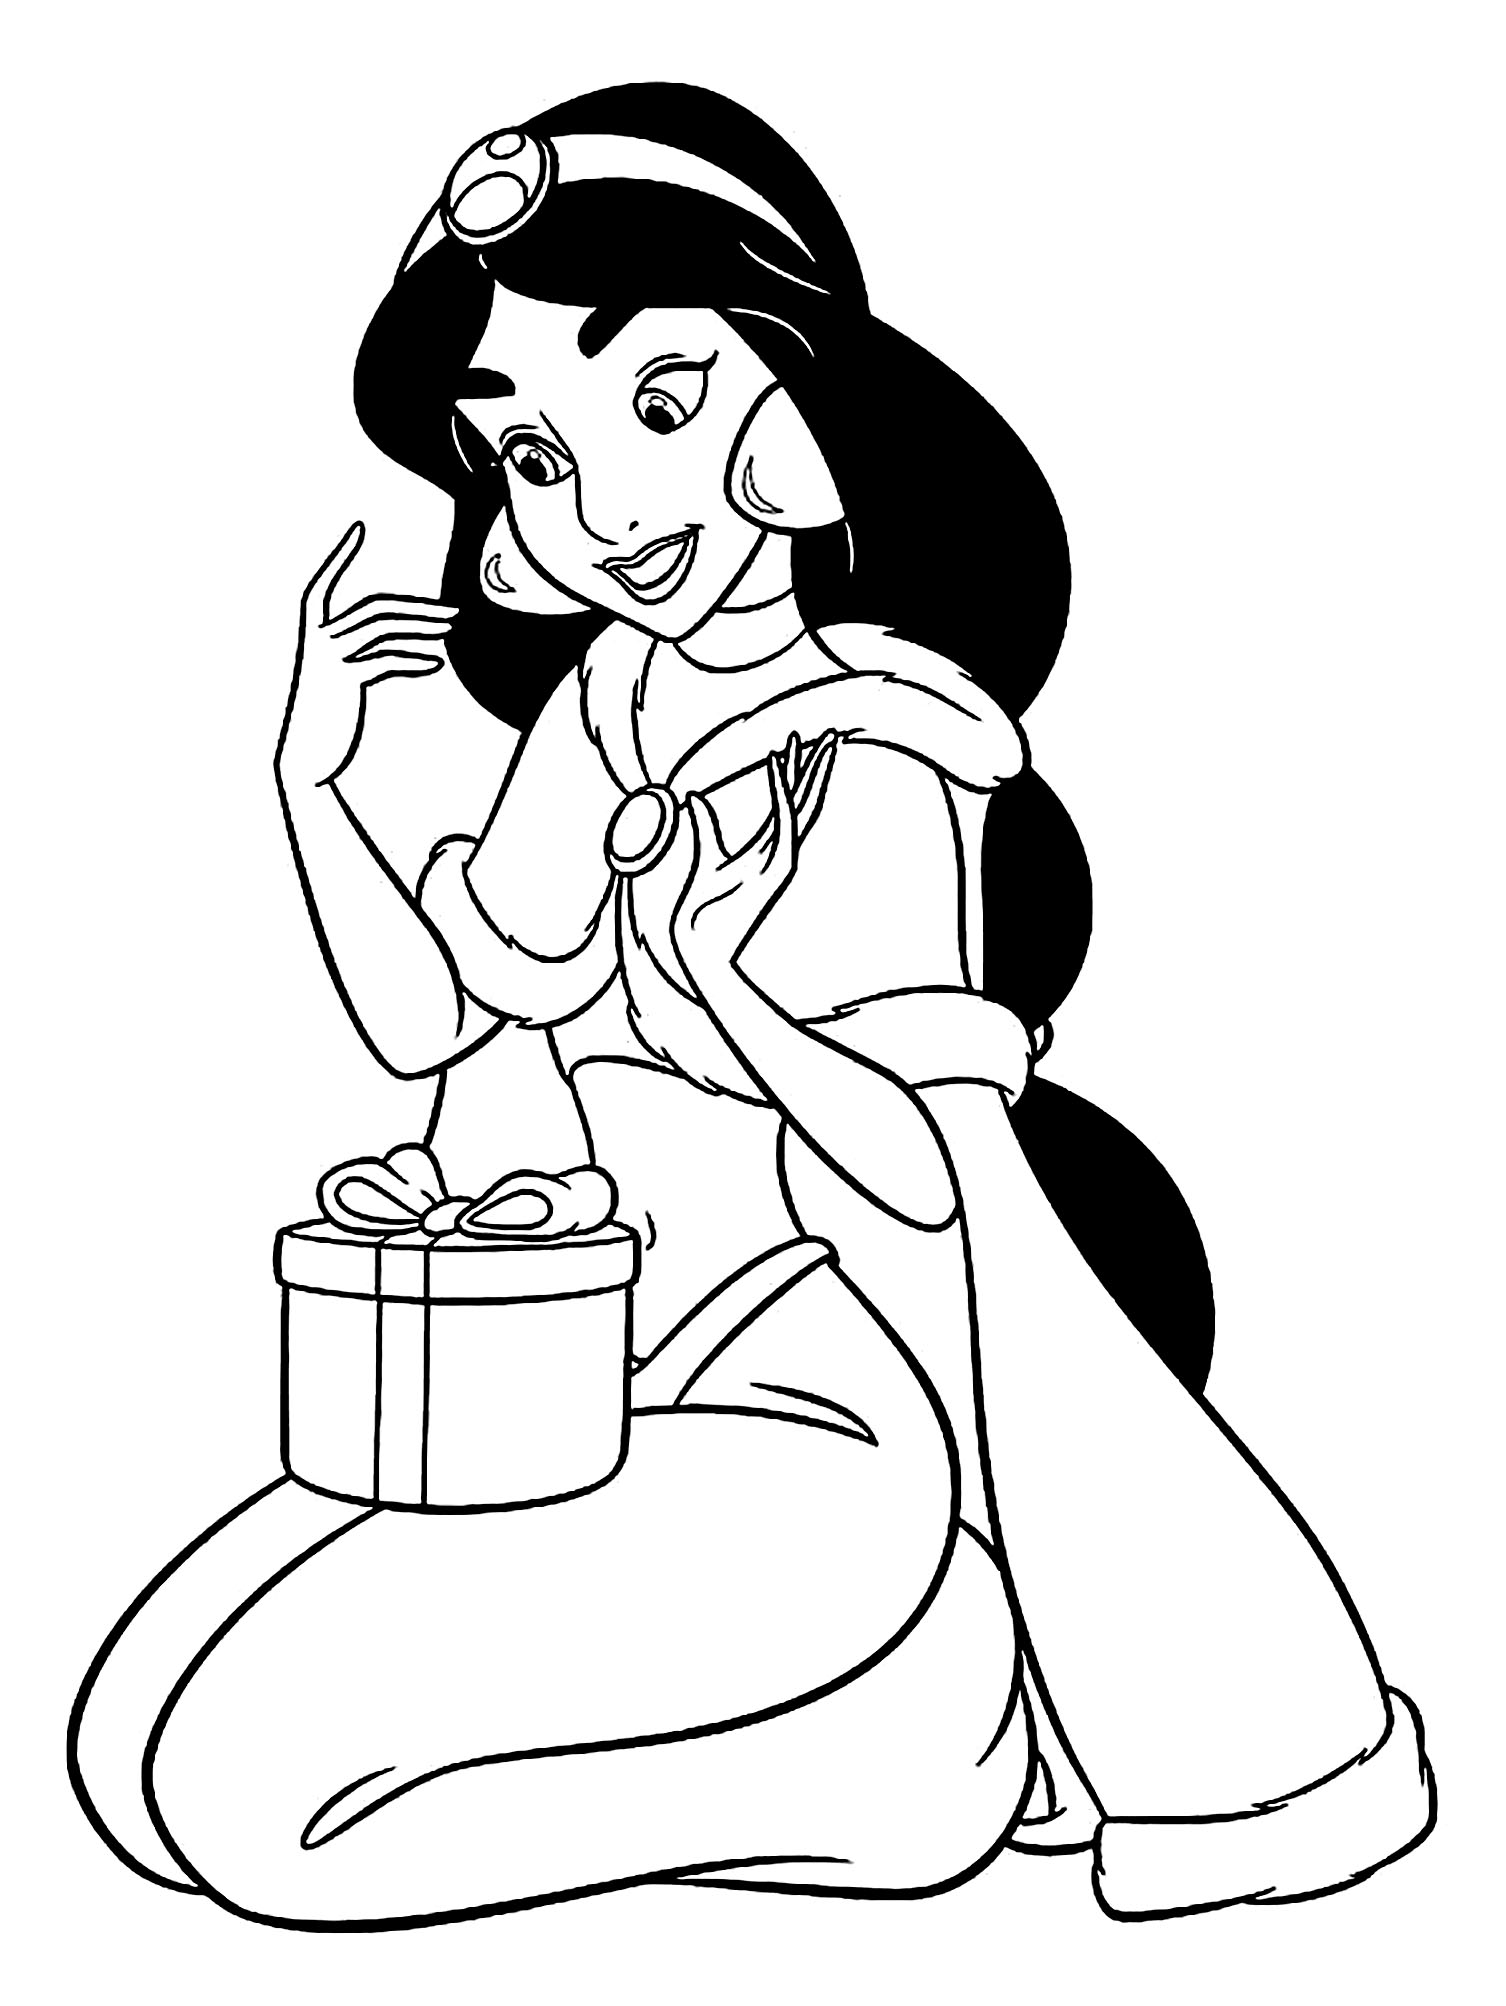 Princess Jasmine painting page for kids - SheetalColor.com